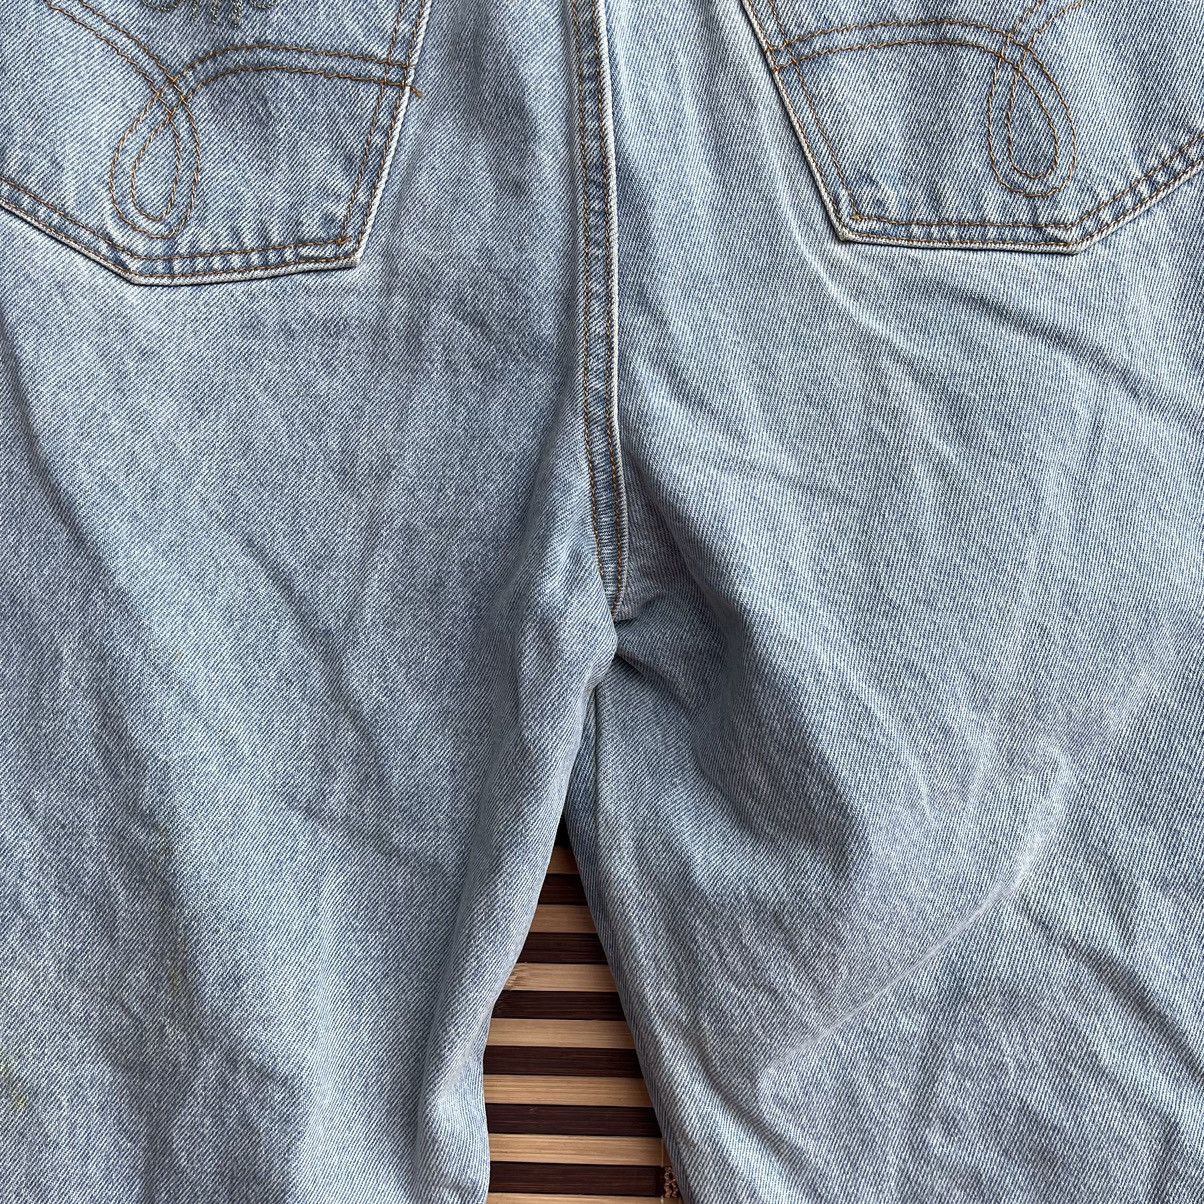 Vintage Steal 🔥 Oppio Italian Denim Jeans - 18